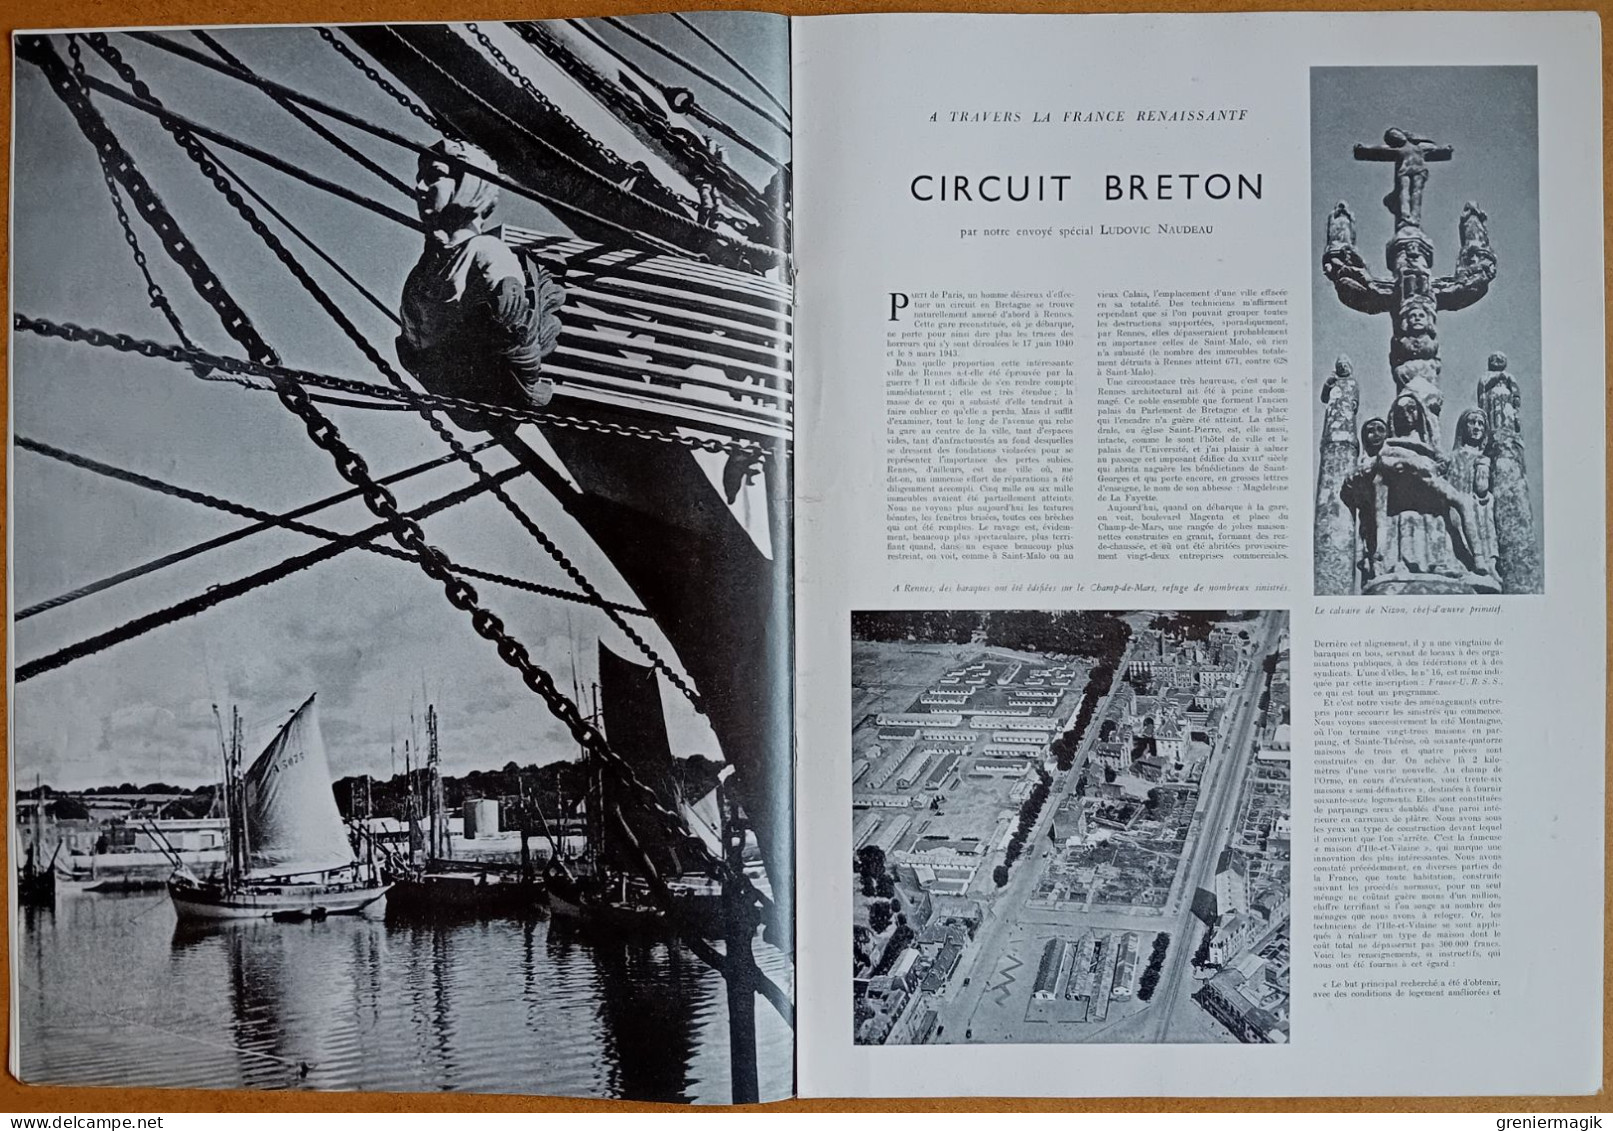 France Illustration N°96 02/08/1947 Circuit breton/Guerre en Indonésie/En URSS/Antarctique/Birmanie/Balkans Liliu Maniu